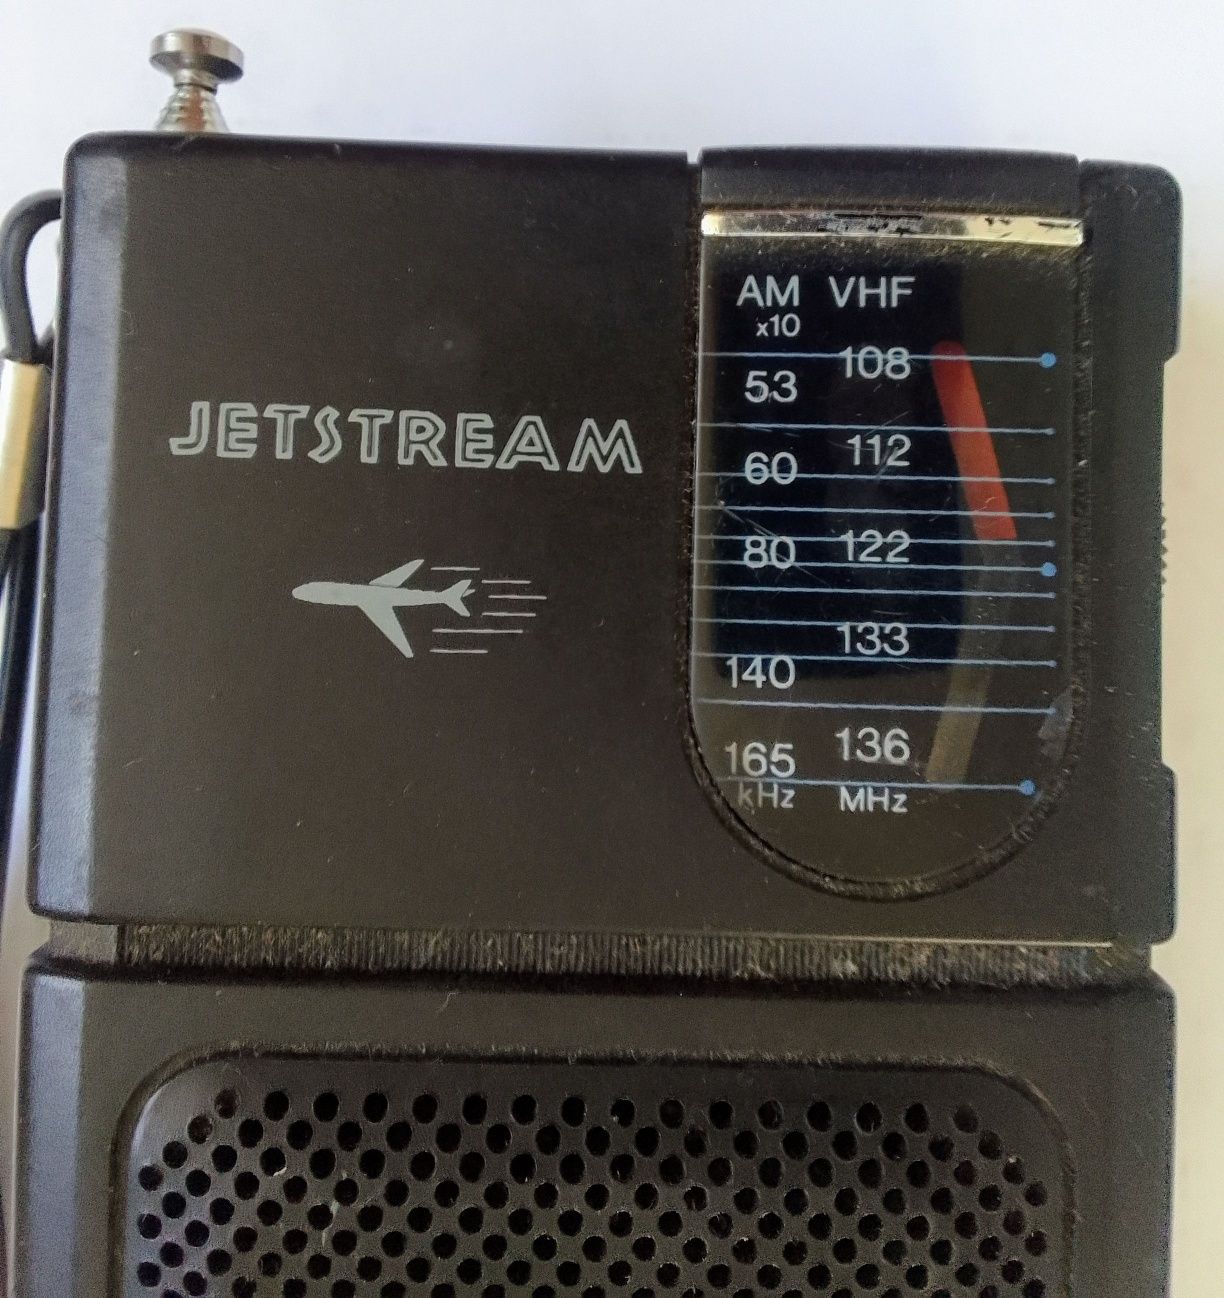 Radio Realistic Jetstream